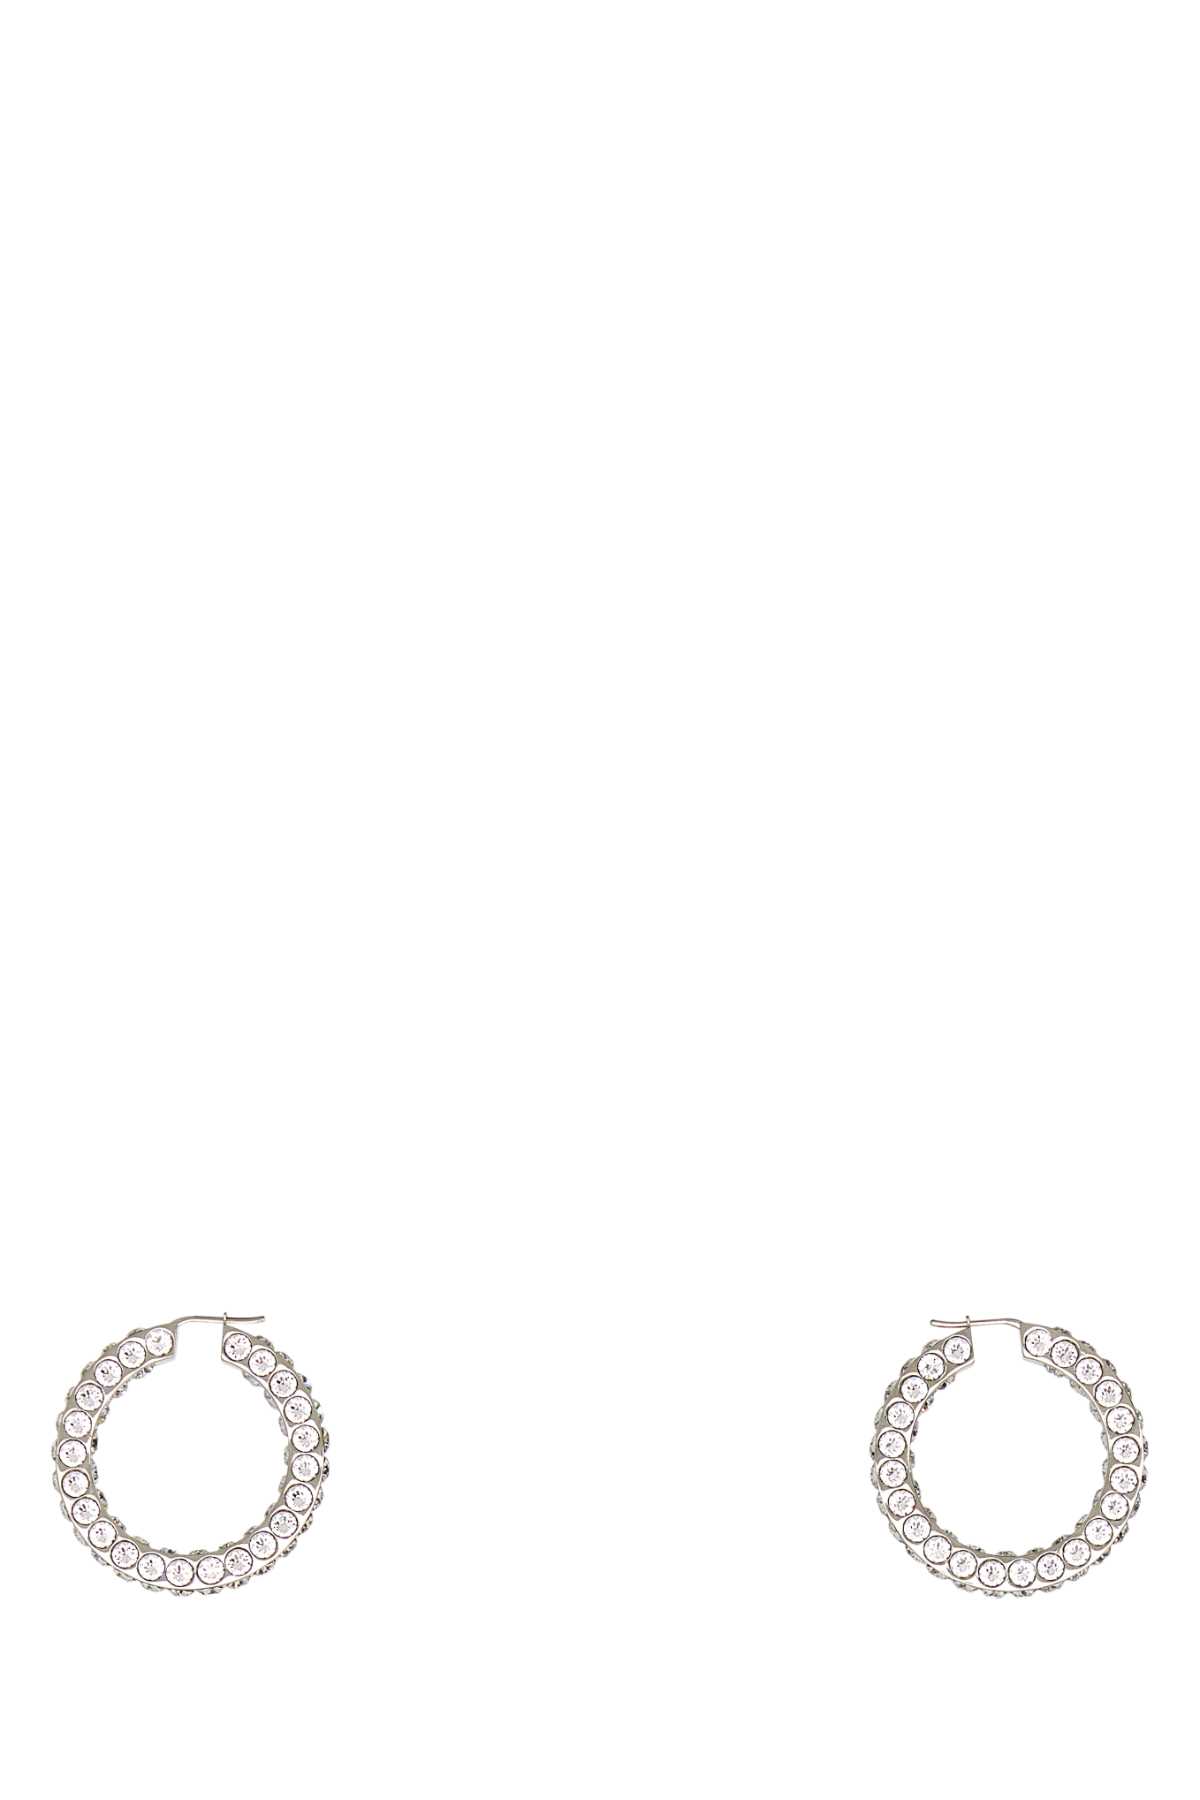 Amina Muaddi Embellished Metal Big Jaheel Earrings